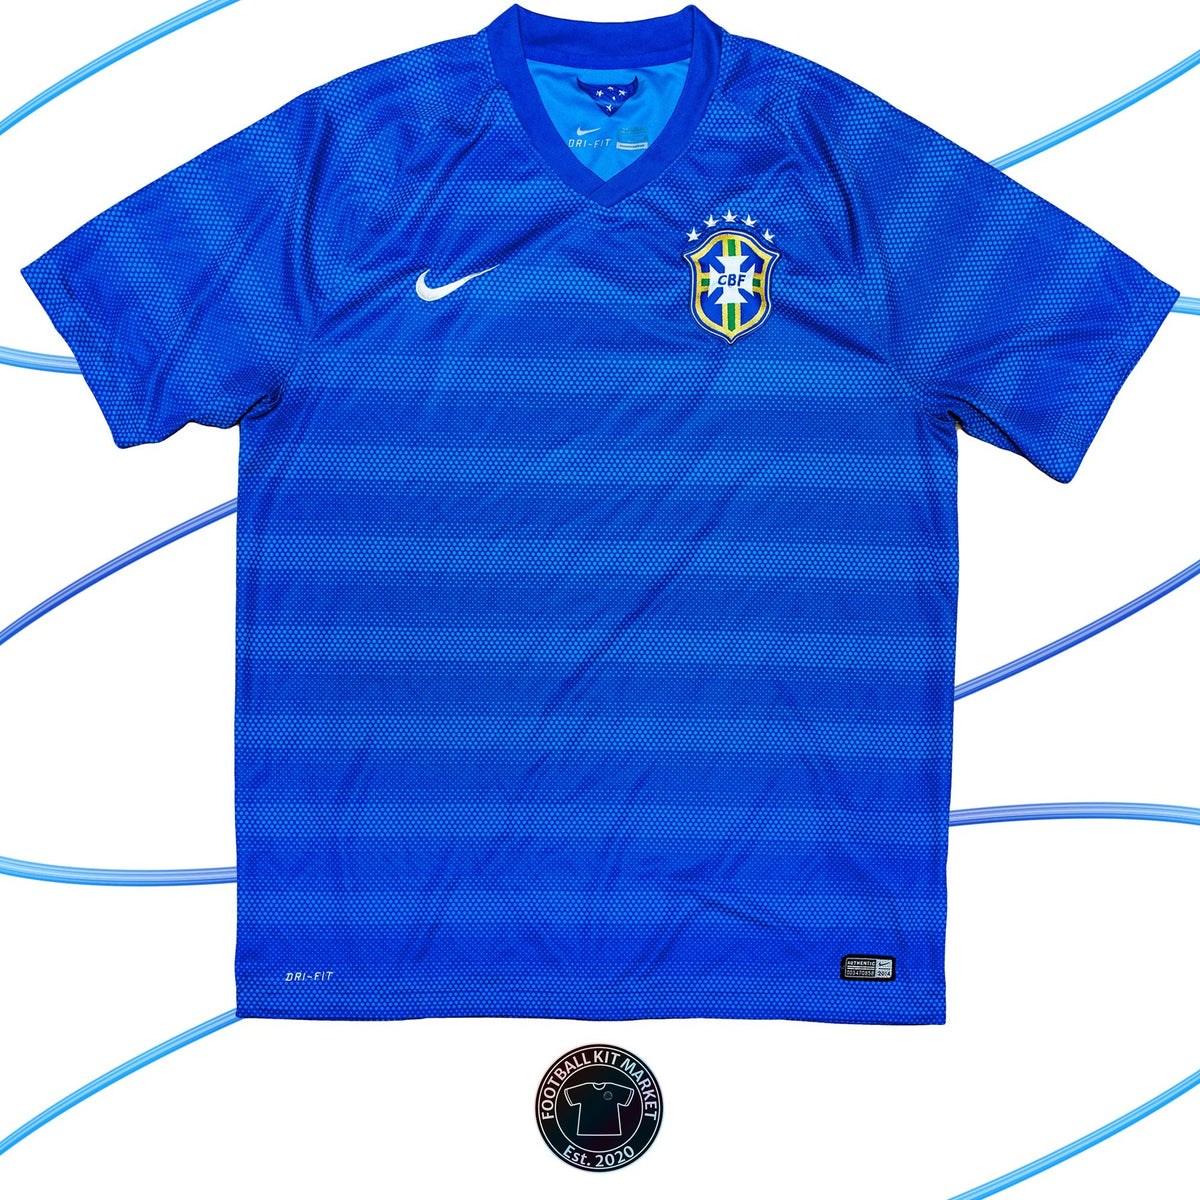 Genuine BRAZIL Away (2014) - NIKE (XL) - Product Image from Football Kit Market